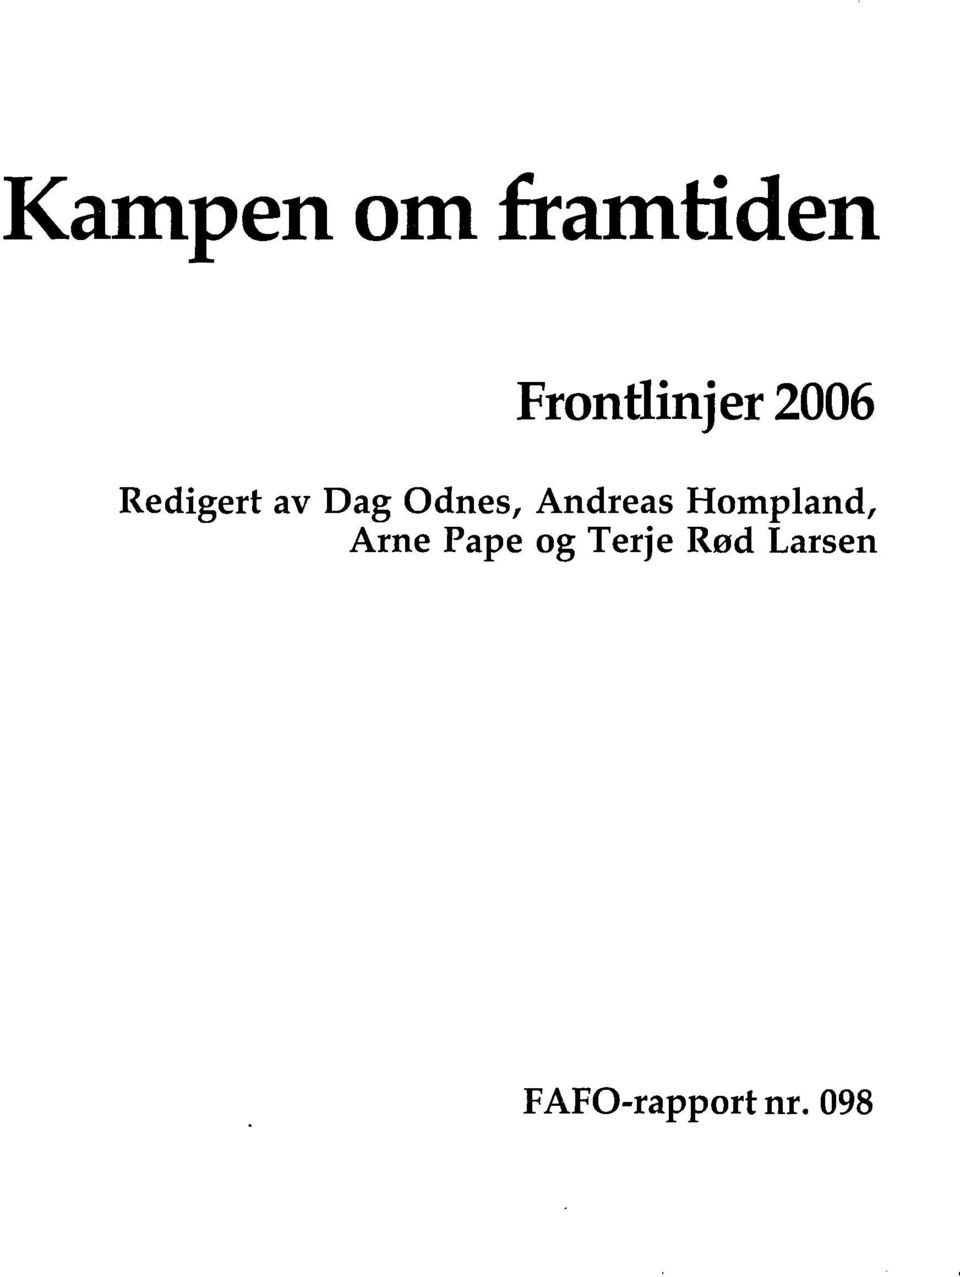 Andreas Hompland, Arne Pape og